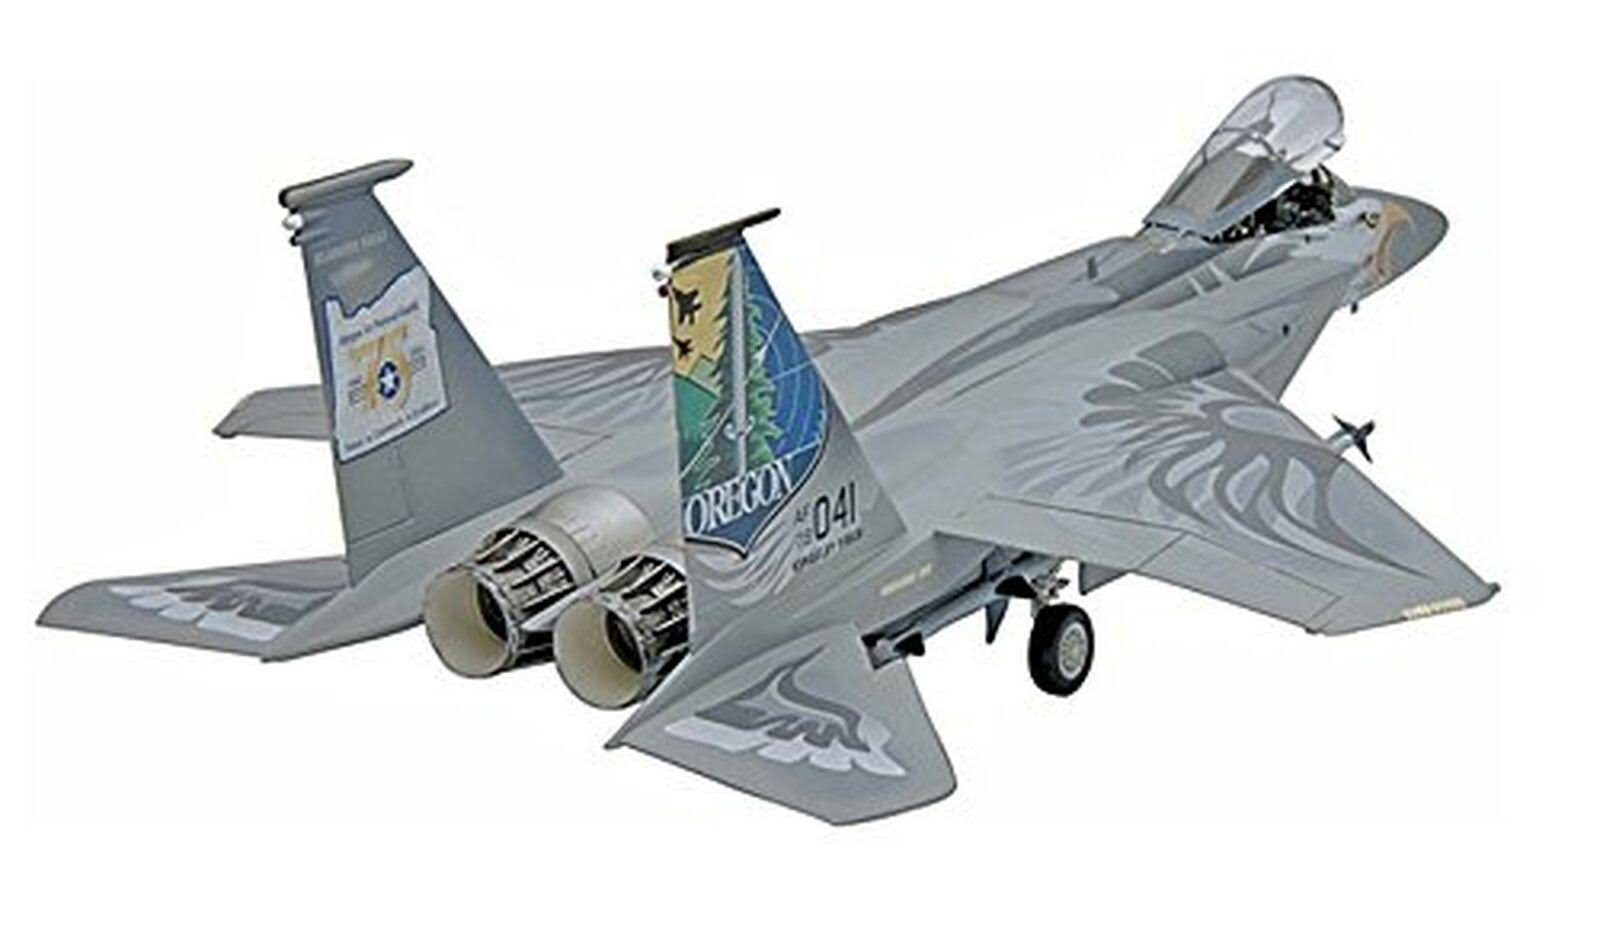 Revell 855870 F-15C Eagle Airplane Plastic Model Kit - 1:48 Scale